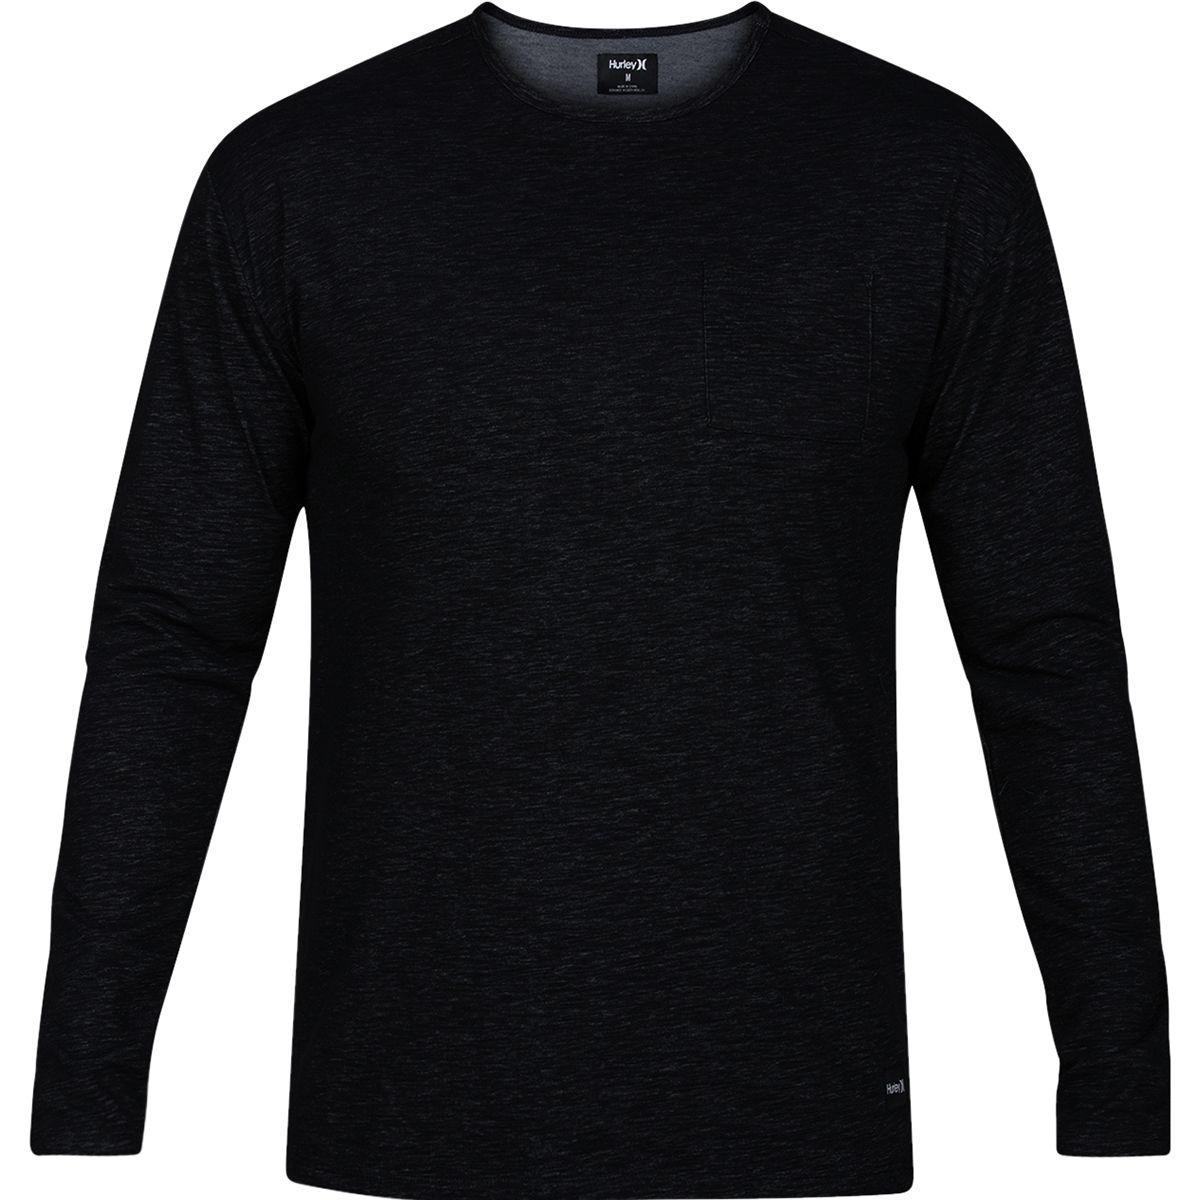 Hurley Cotton Dri-fit Lagos Port Long Sleeve Shirt in Black for Men - Lyst